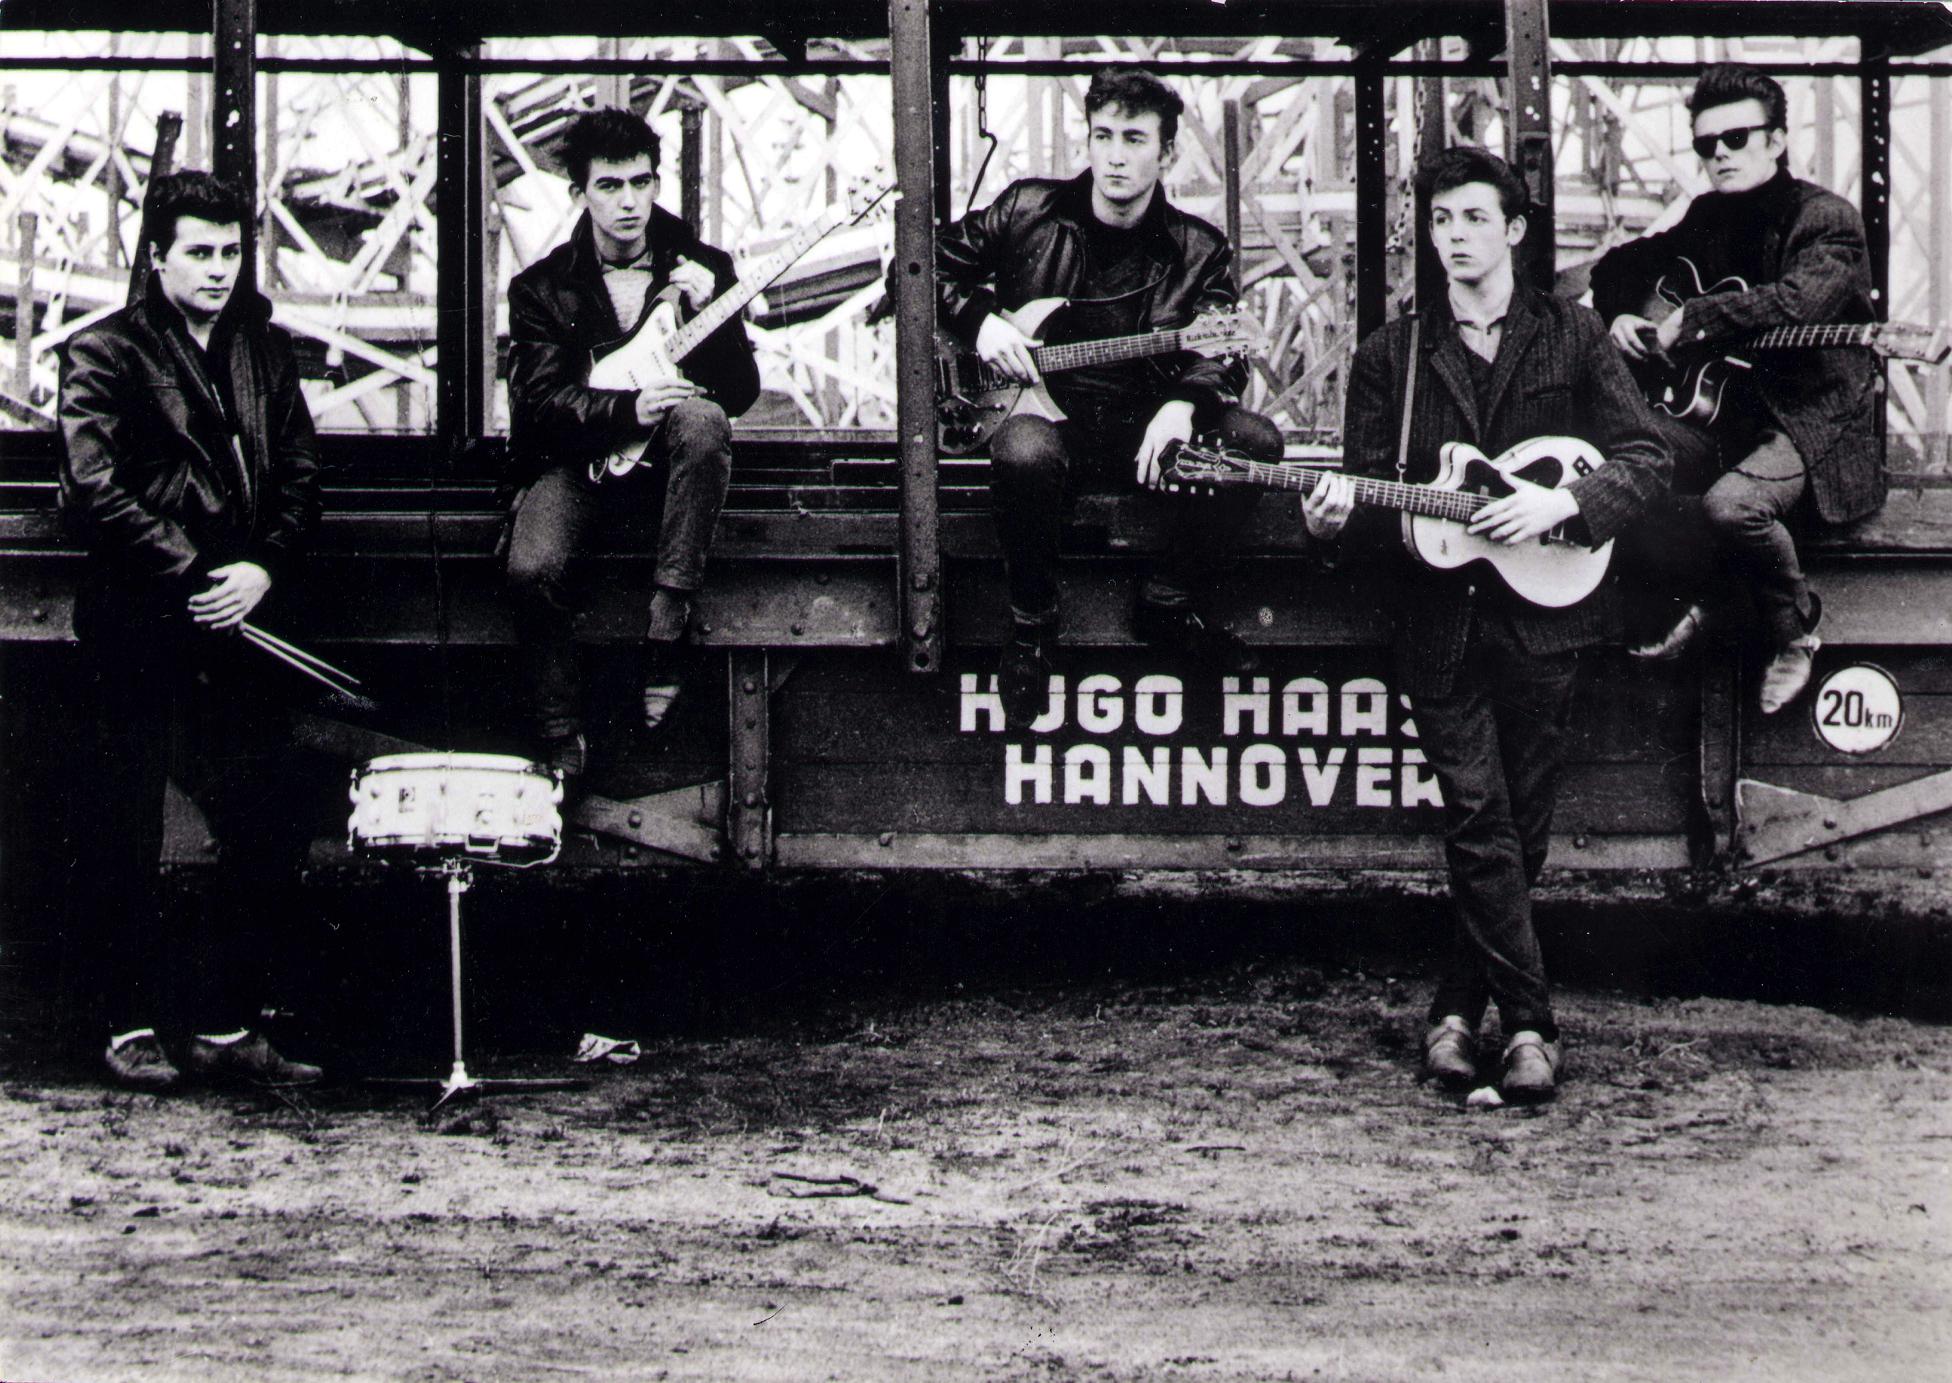 November 1960 Beatles Photo — The Beatles first photoshoot